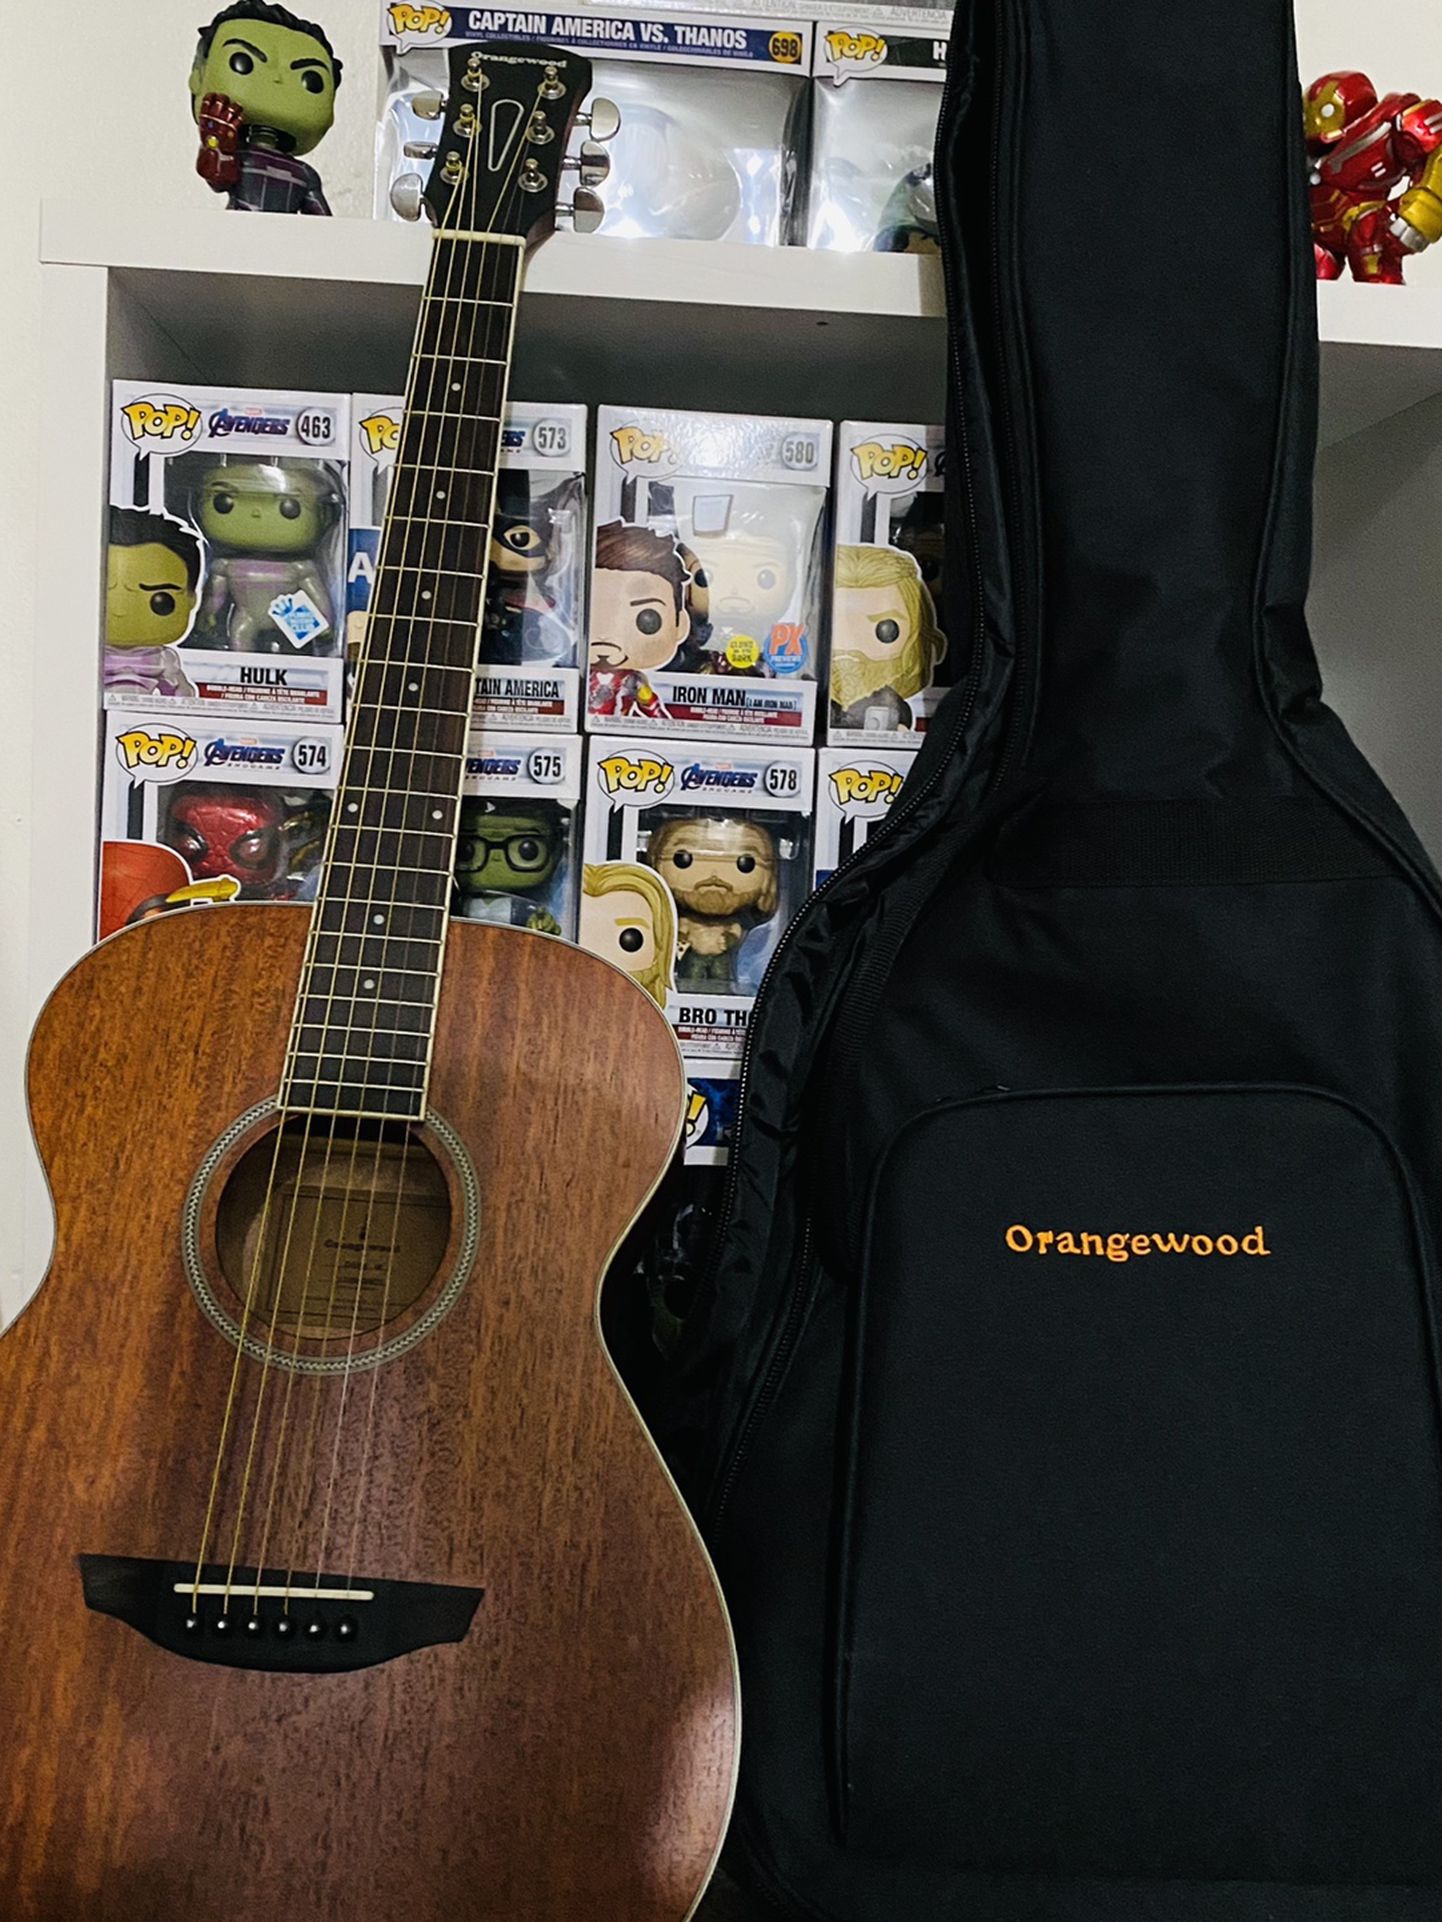 Orangewood Guitar